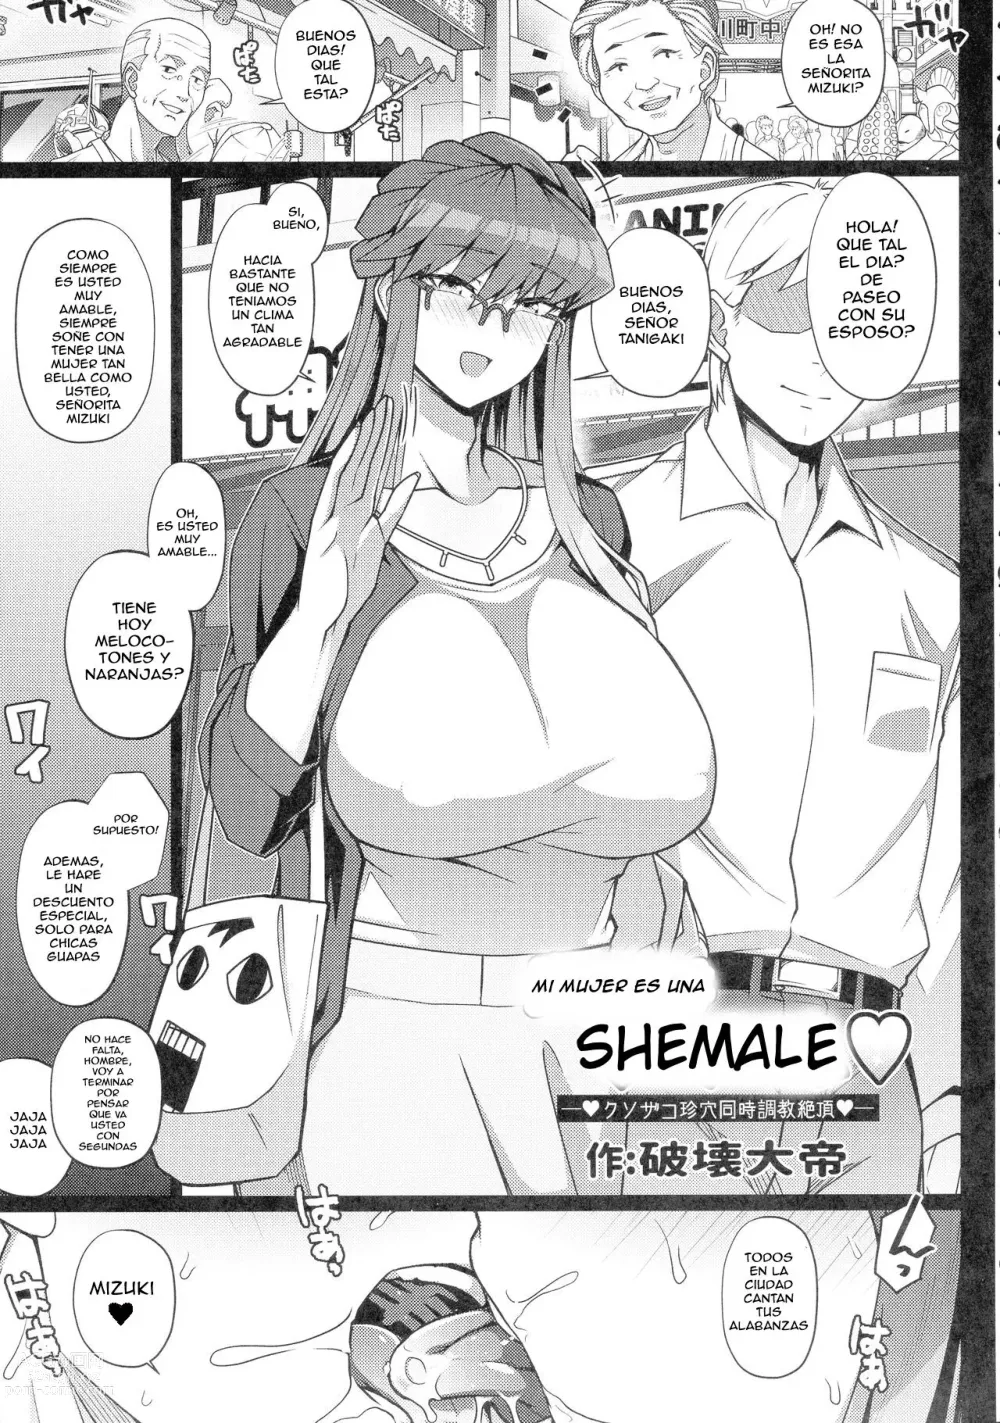 Page 3 of doujinshi Paginas 7-12 SHEMALE CS HAVEN